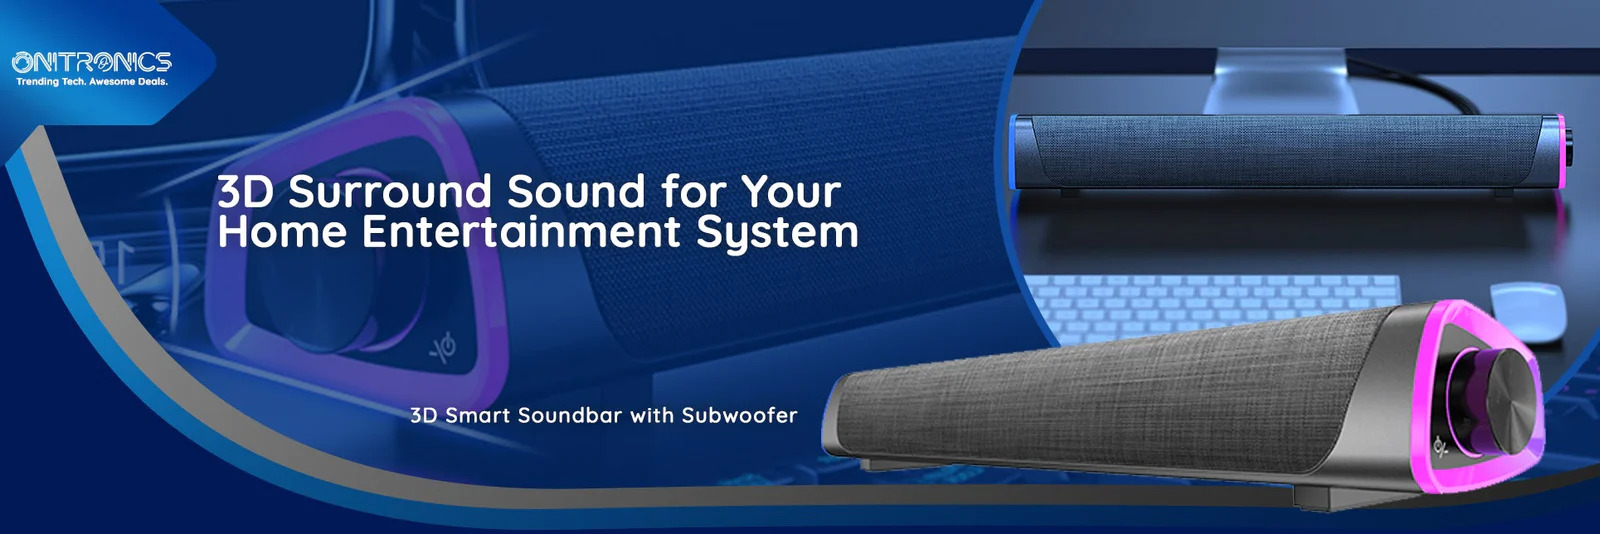 3D-Smart-Soundbar-with-Subwoofer_c4f19019-cb6e-43c6-87b4-c564bd8d30d9_1600x800